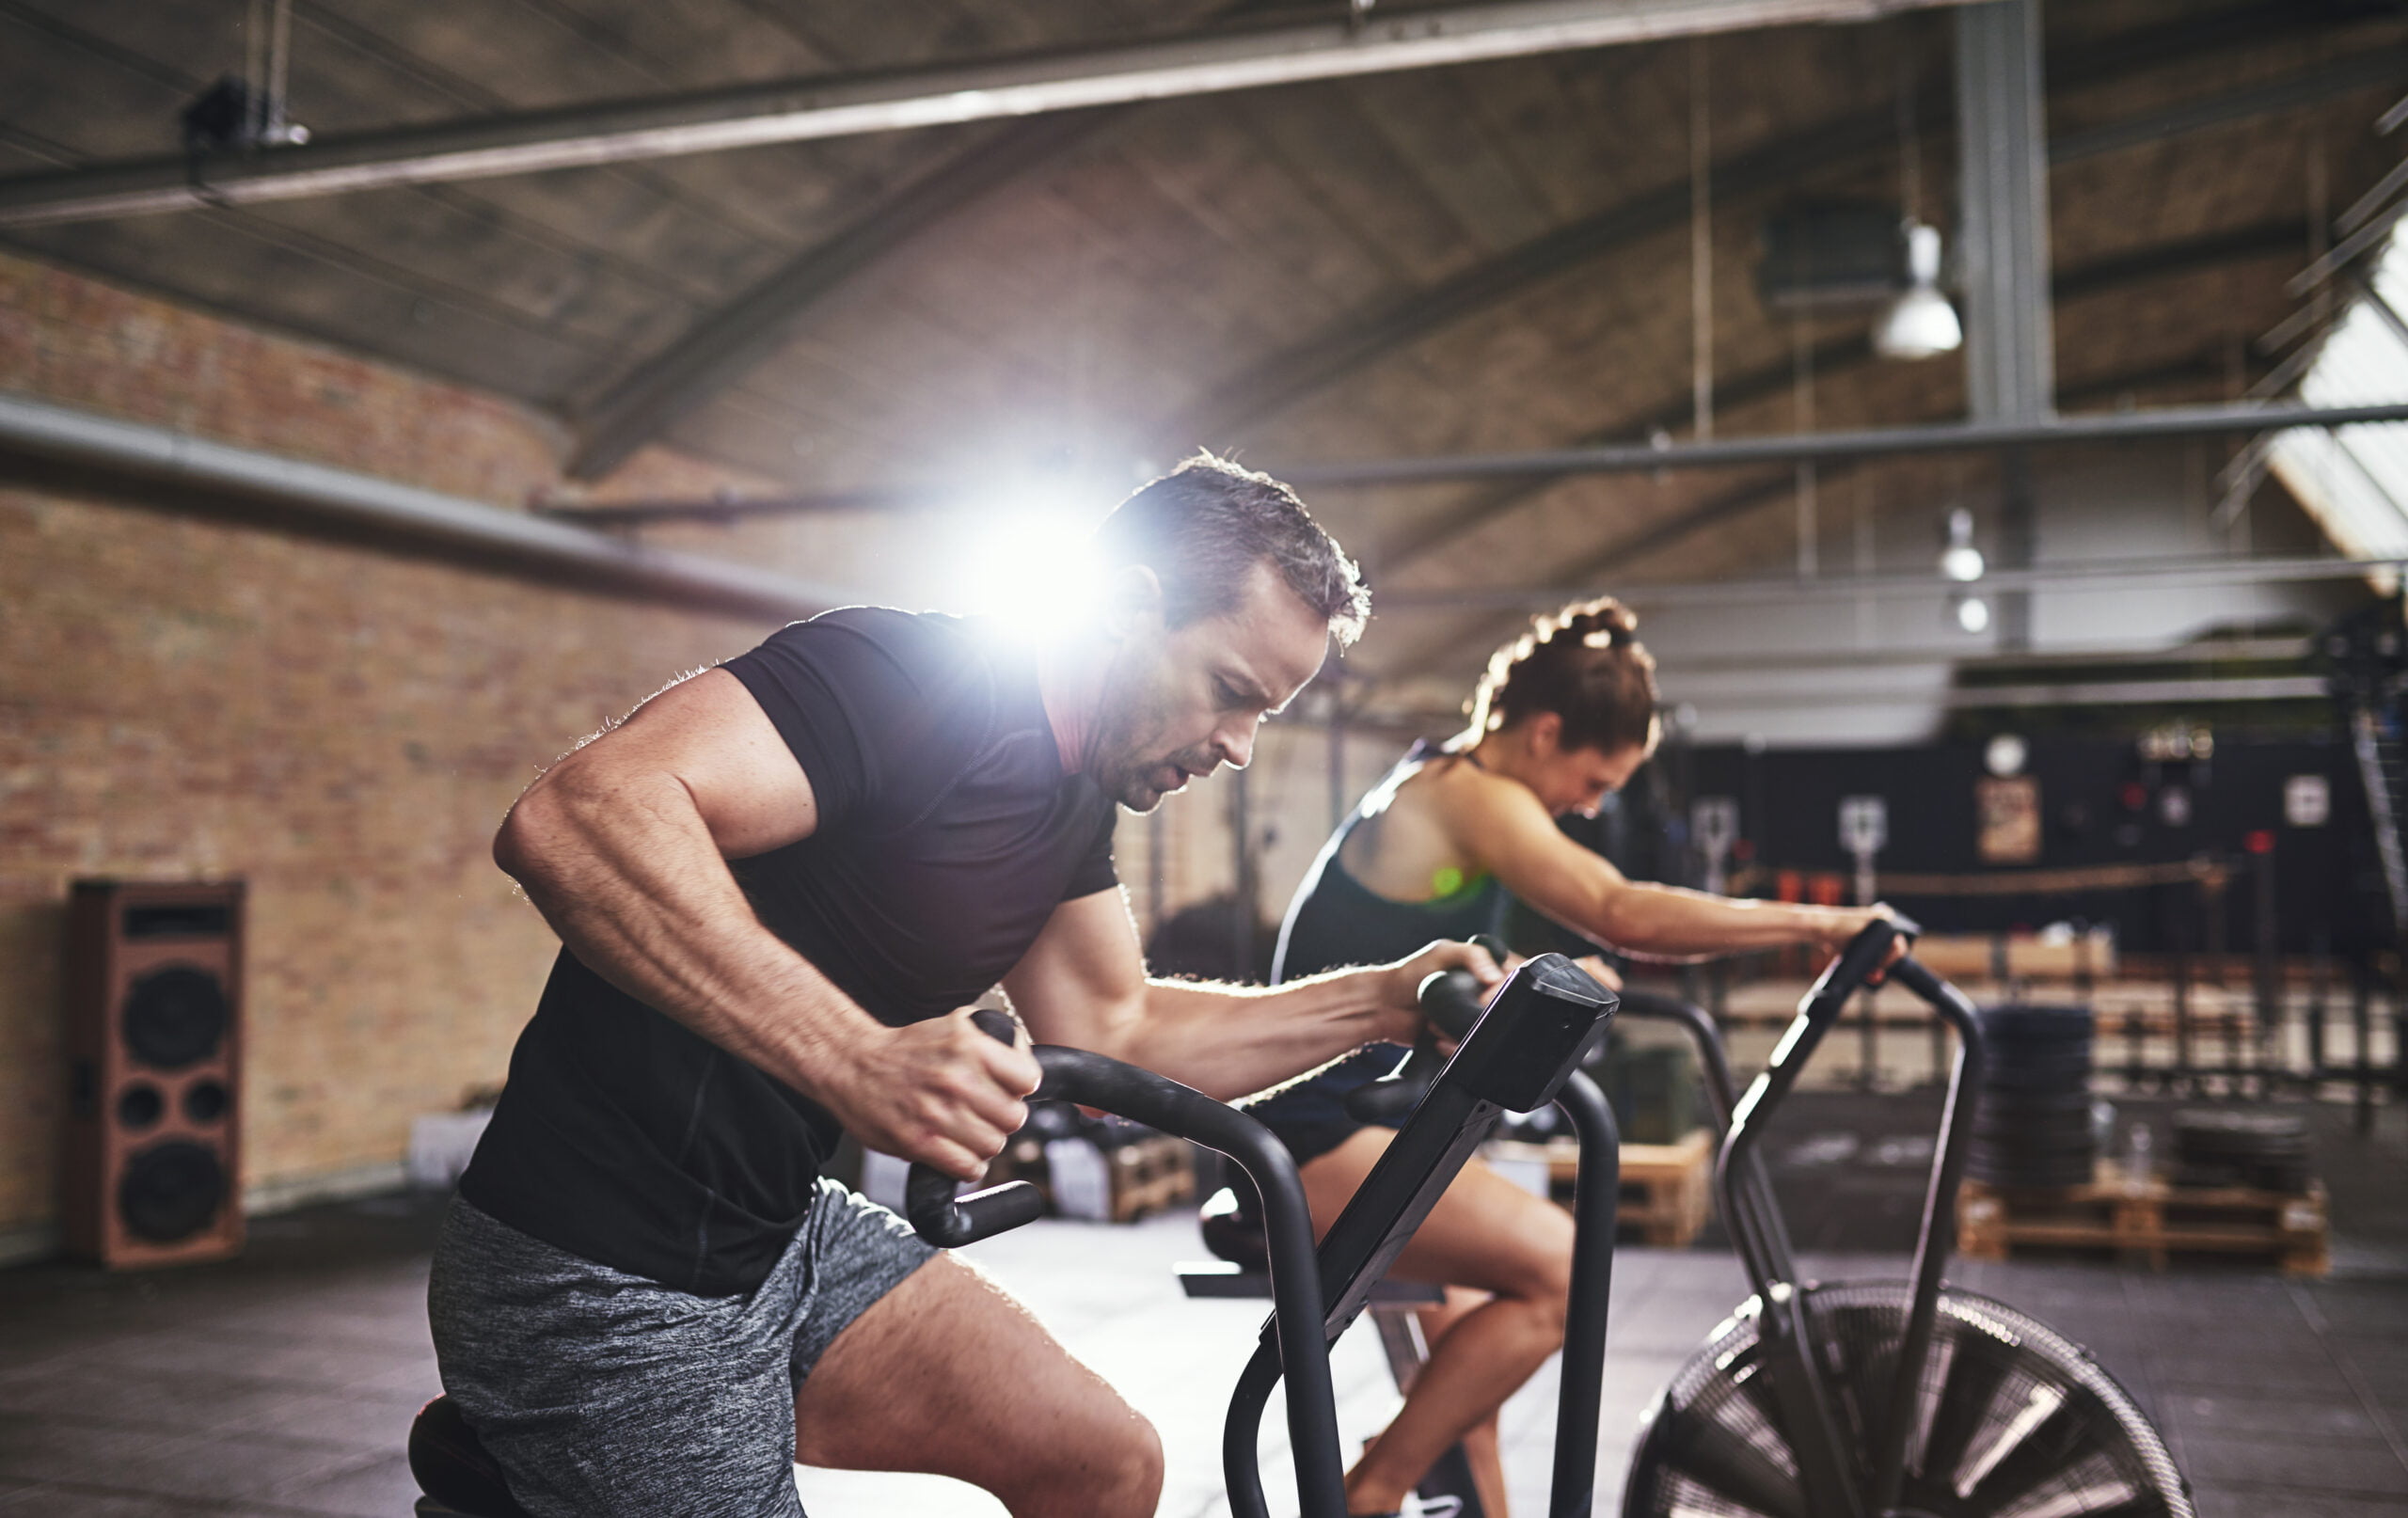 sportsmen-working-out-hard-on-cycling-machines-2021-08-26-17-26-42-utc-scaled.jpg